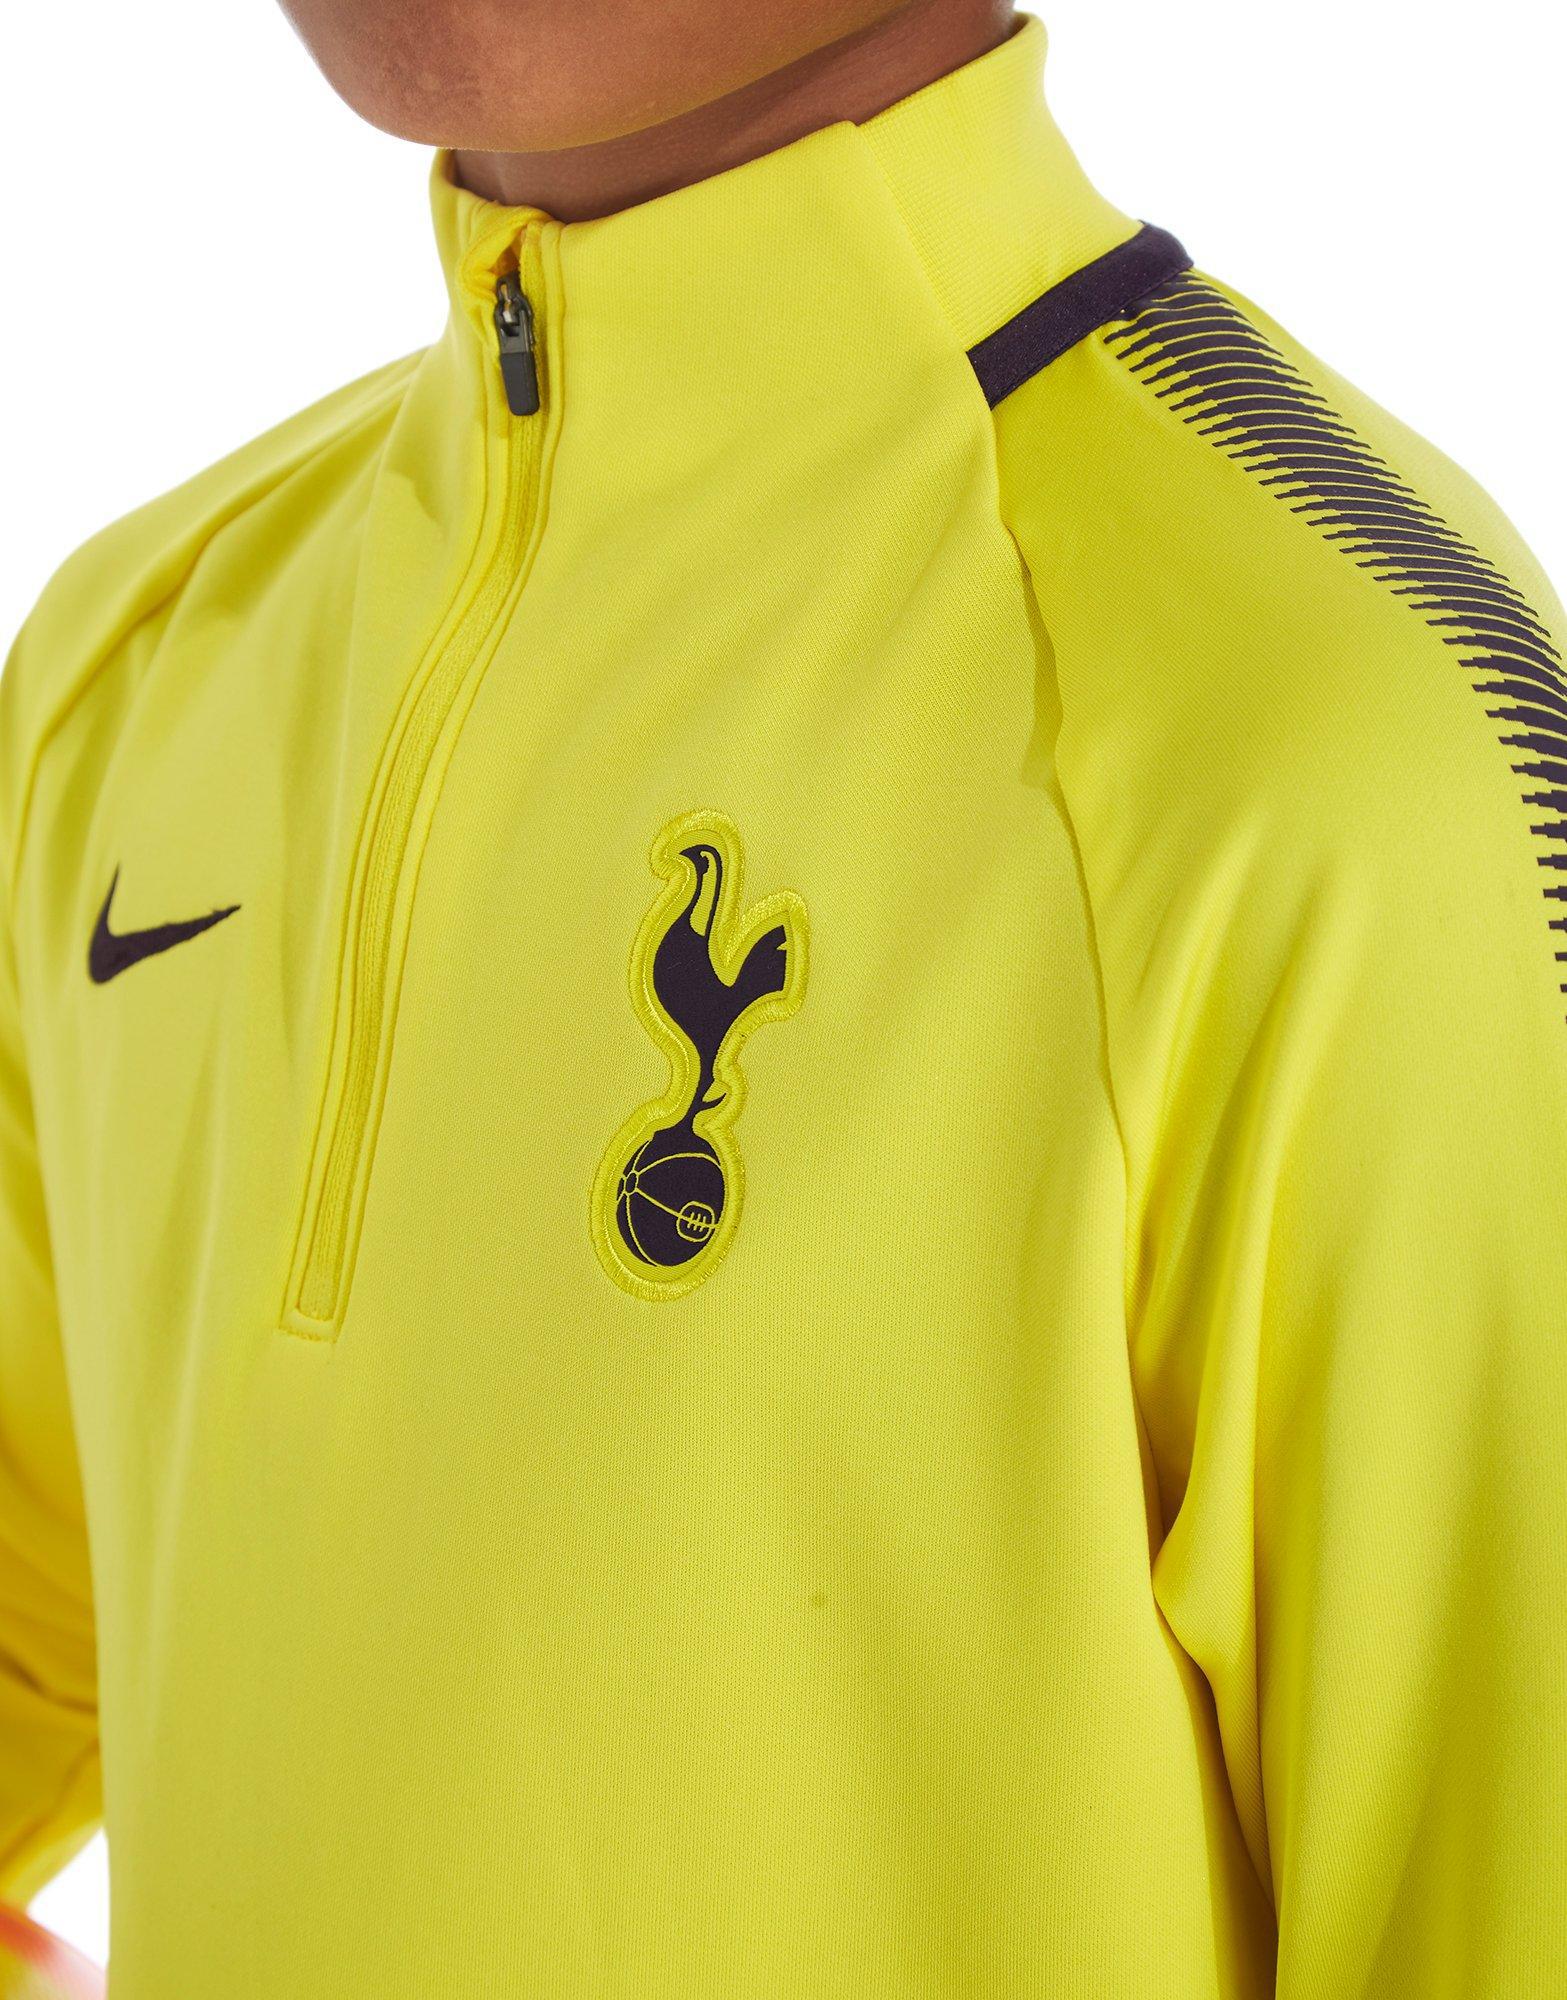 Nike Synthetic Tottenham Hotspur 2017 Squad Drill Top ...